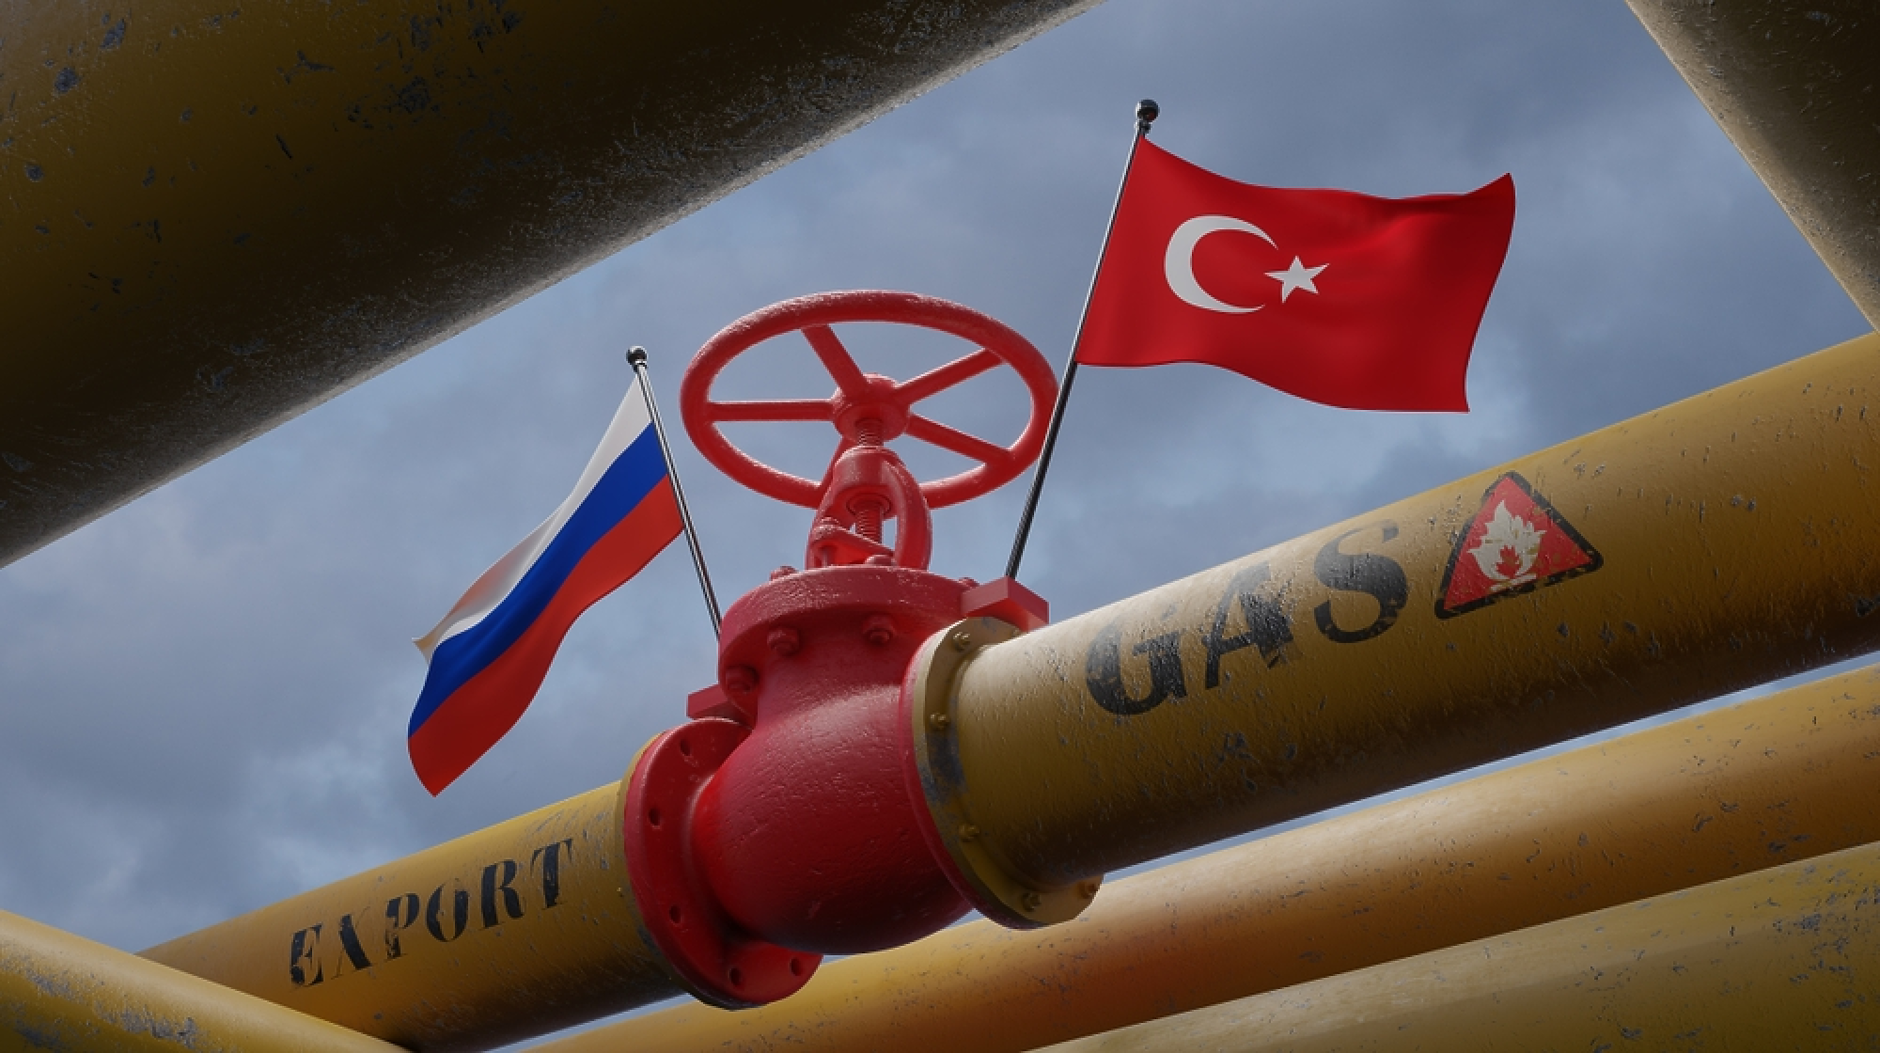 Газпром спира транзита на газ по Турски поток от понеделник  заради планов ремонт